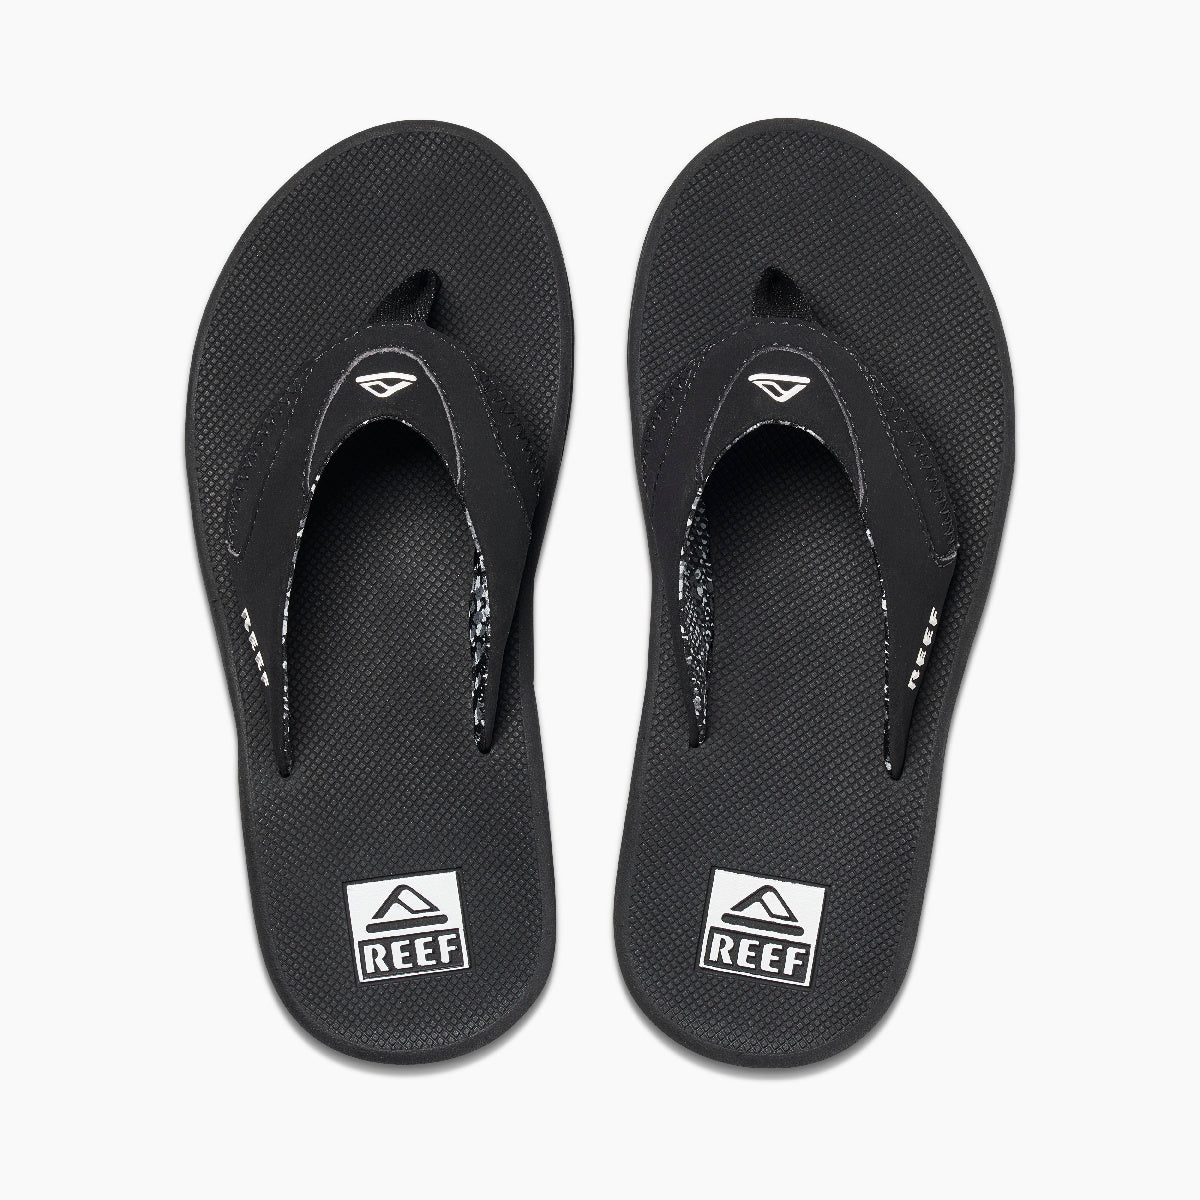 Womens Fanning flip flop sandals in black top view